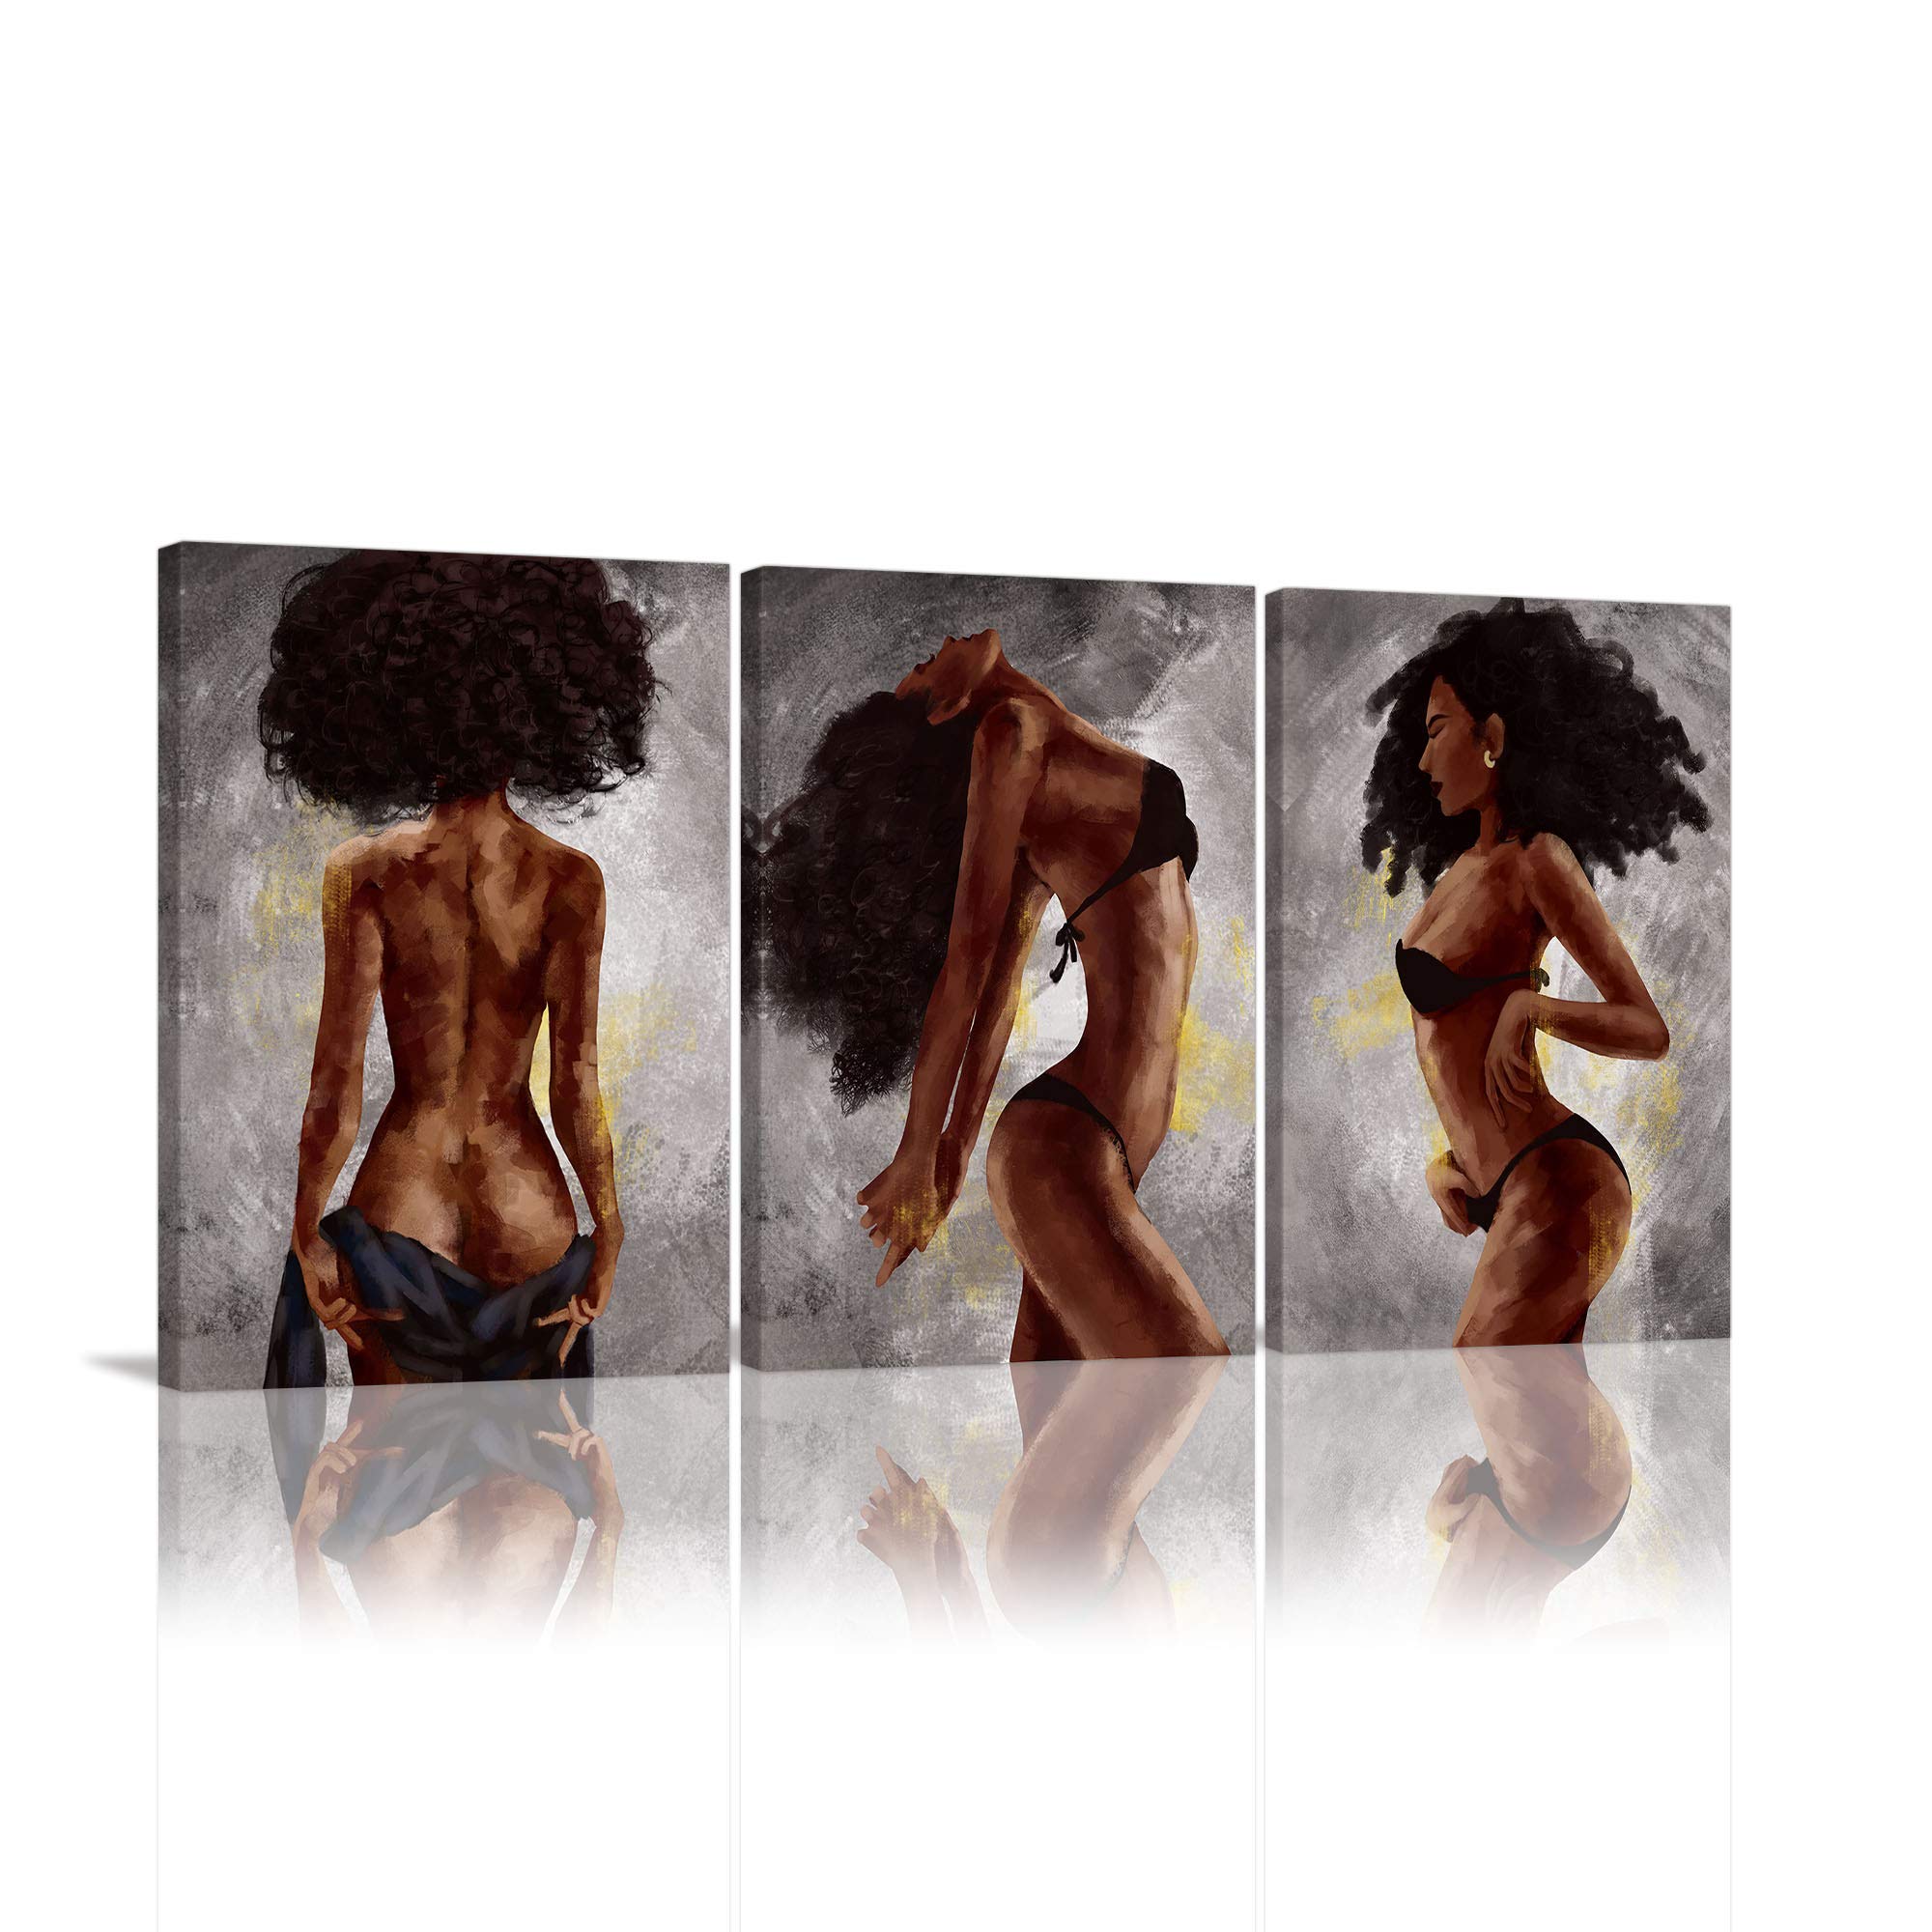 deborah thornhill recommends Erotic Nude Black Women